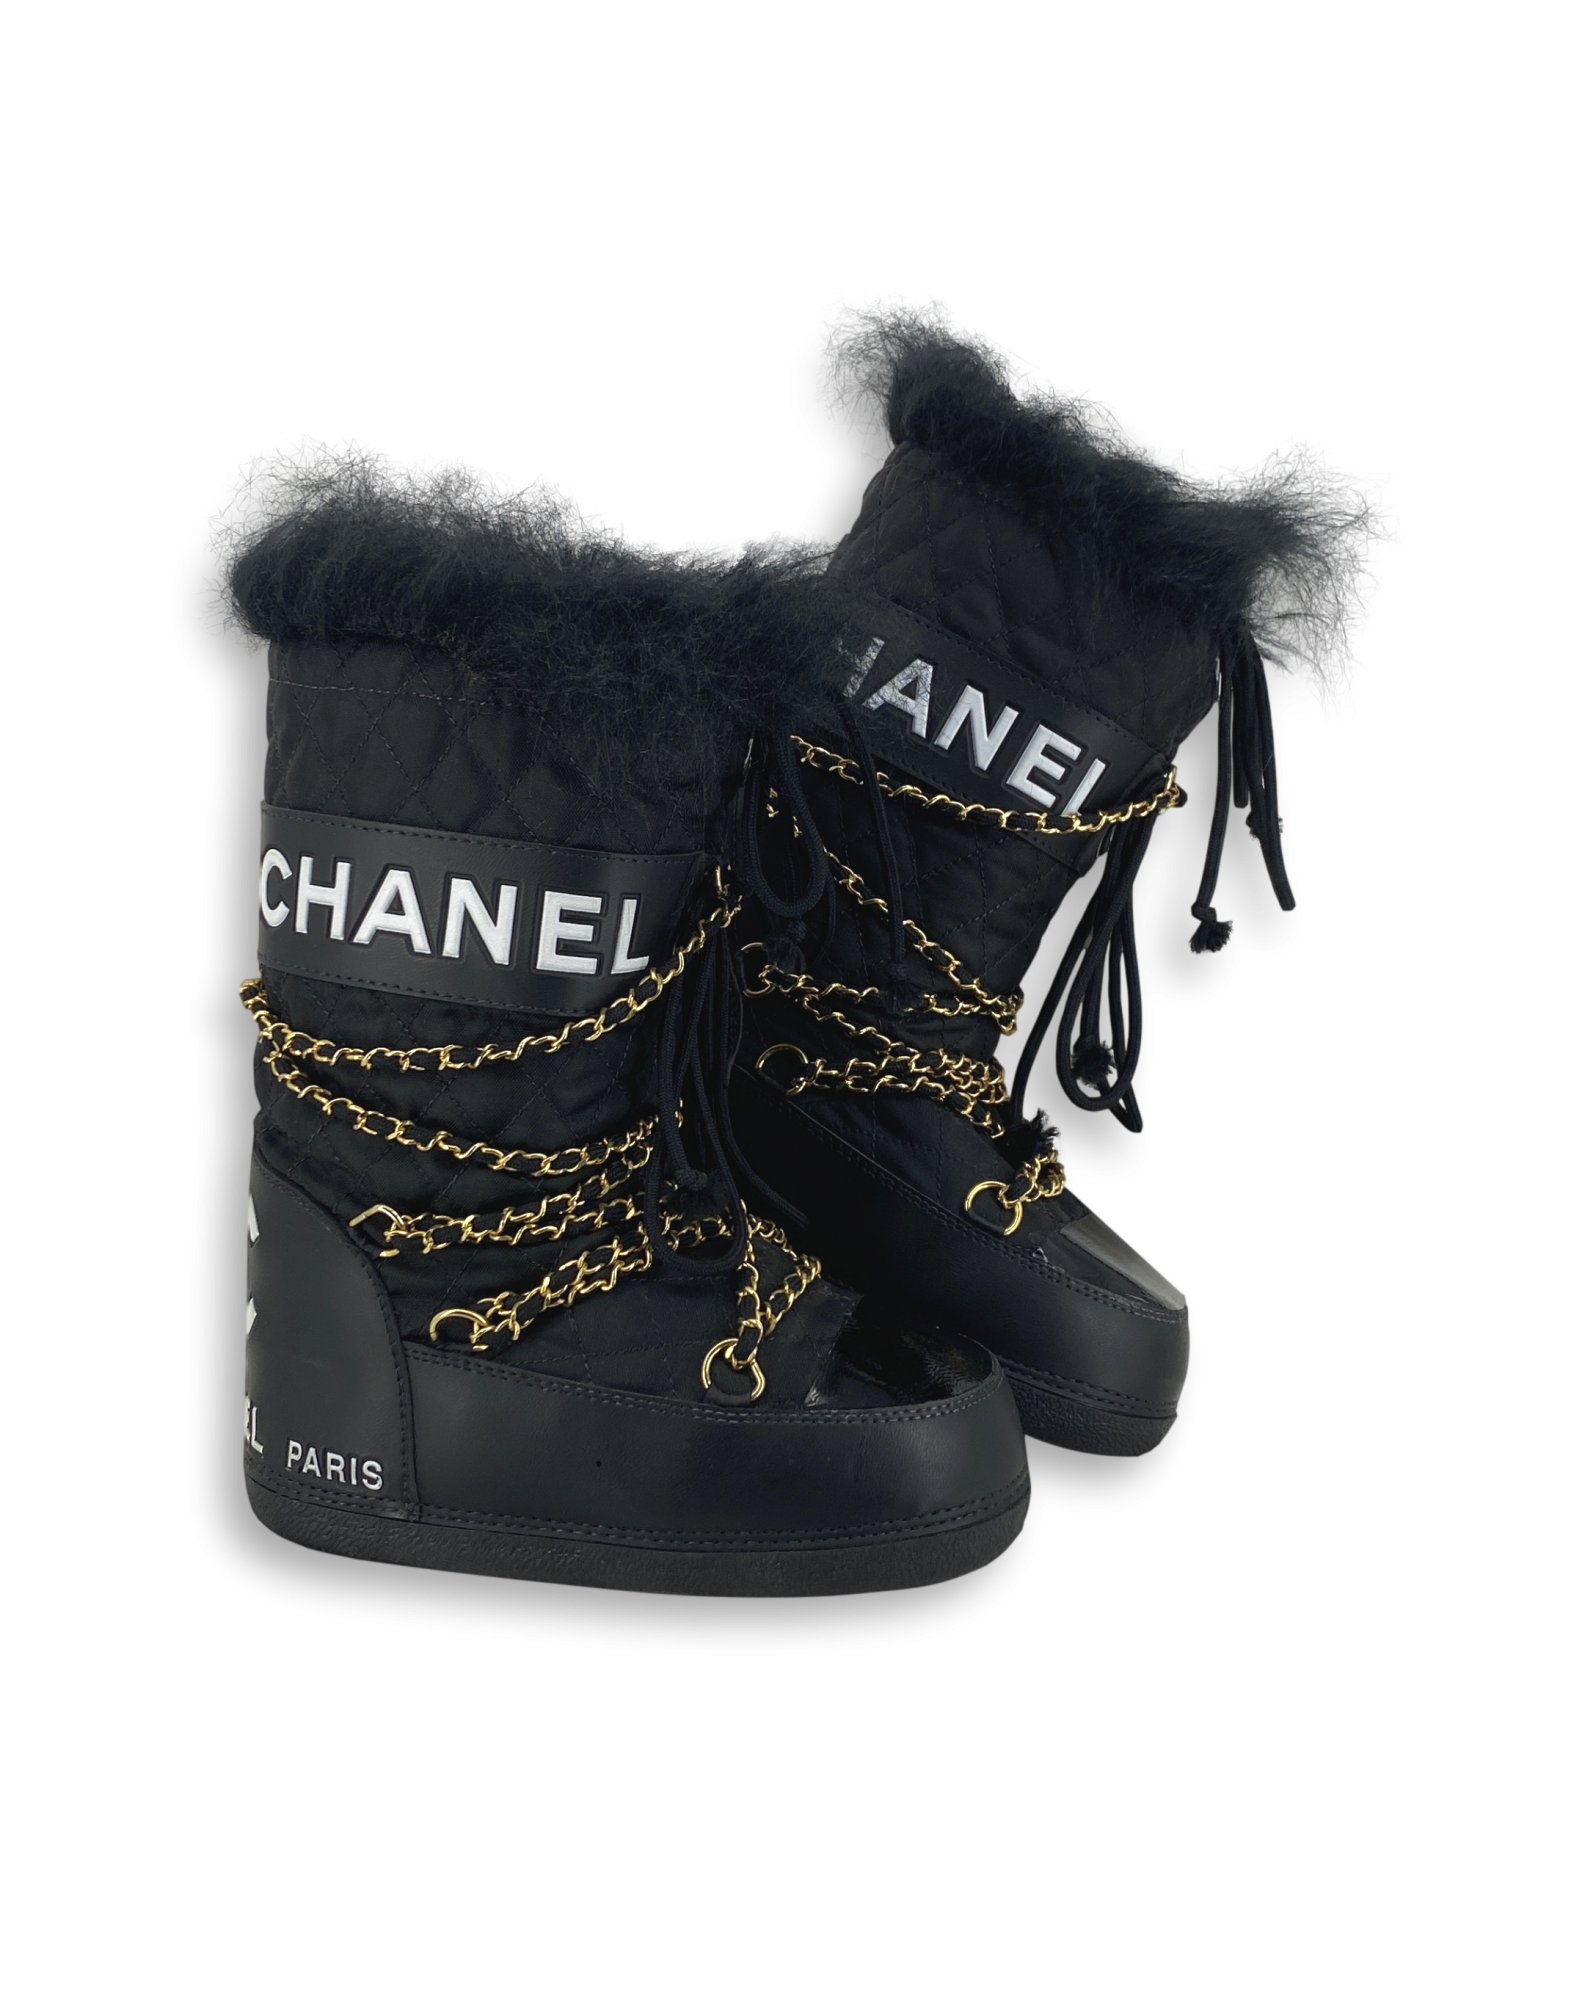 Chanel iconic black Moonboots